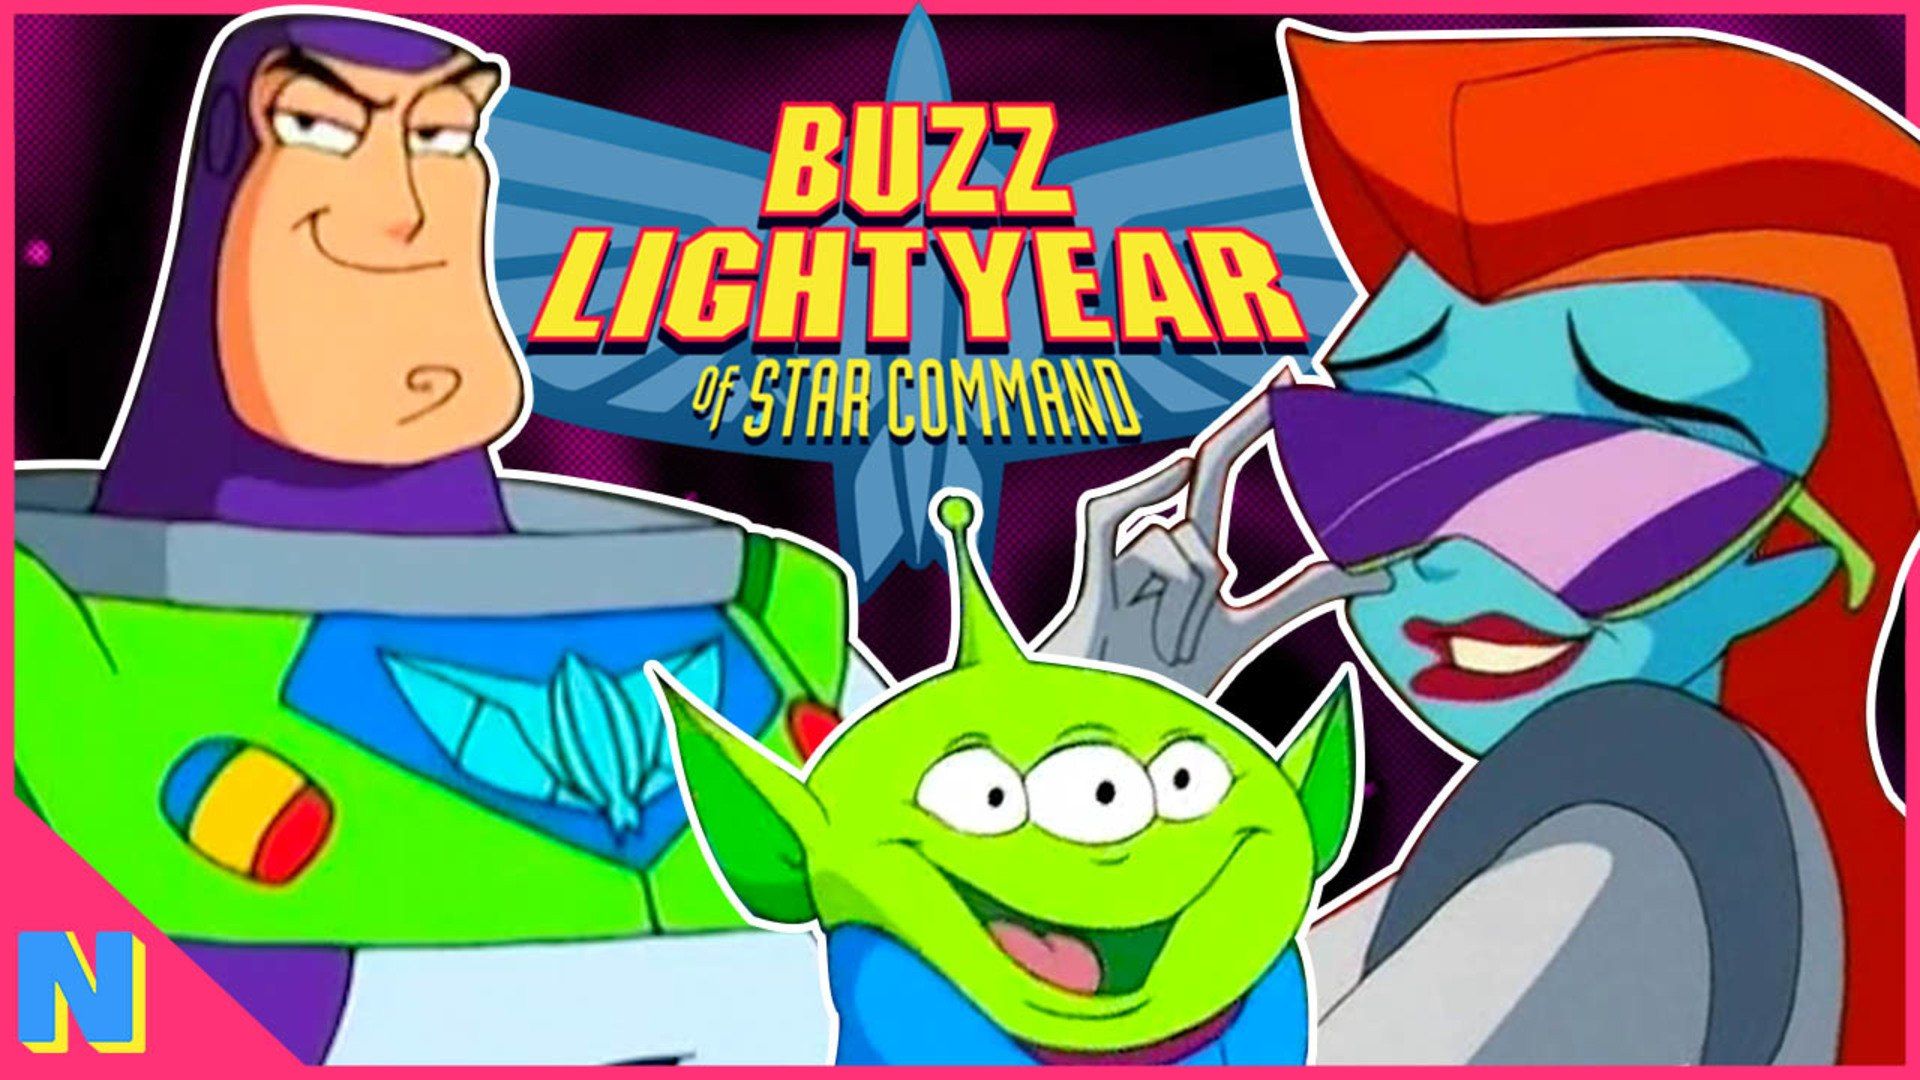 Remember When Buzz Lightyear Had a Cartoon?